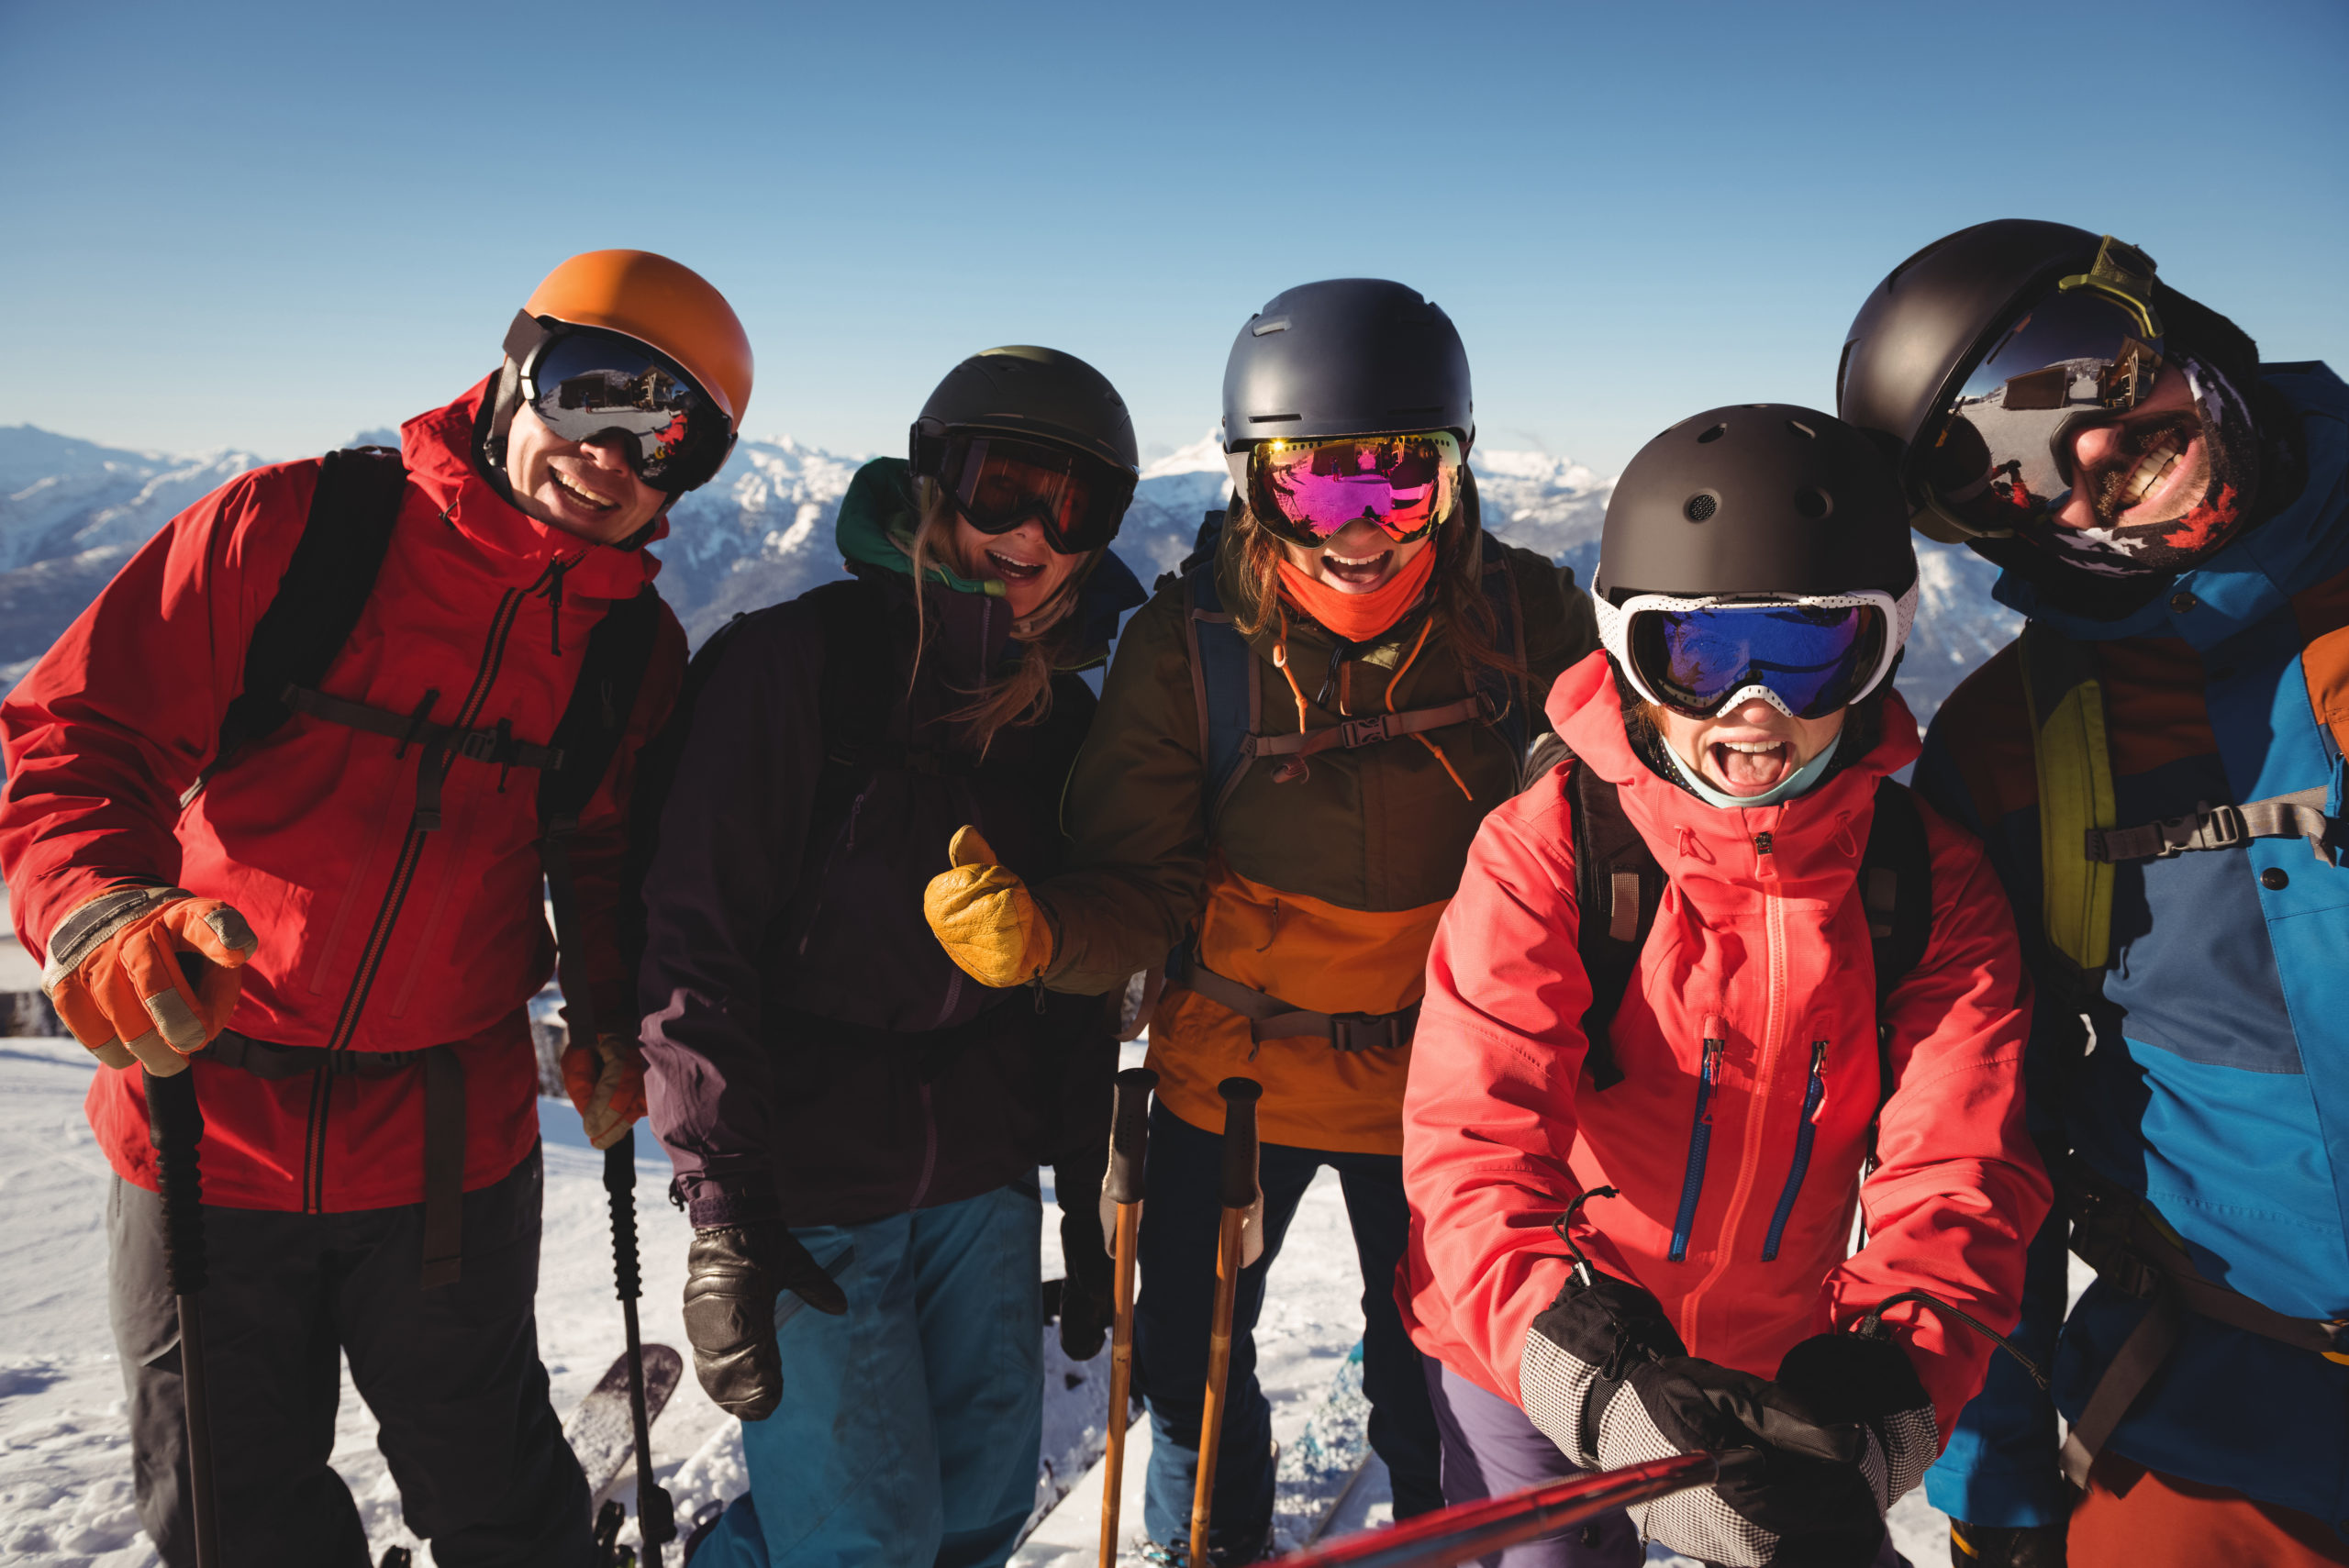 Group of skiers having fun in ski resort during winter